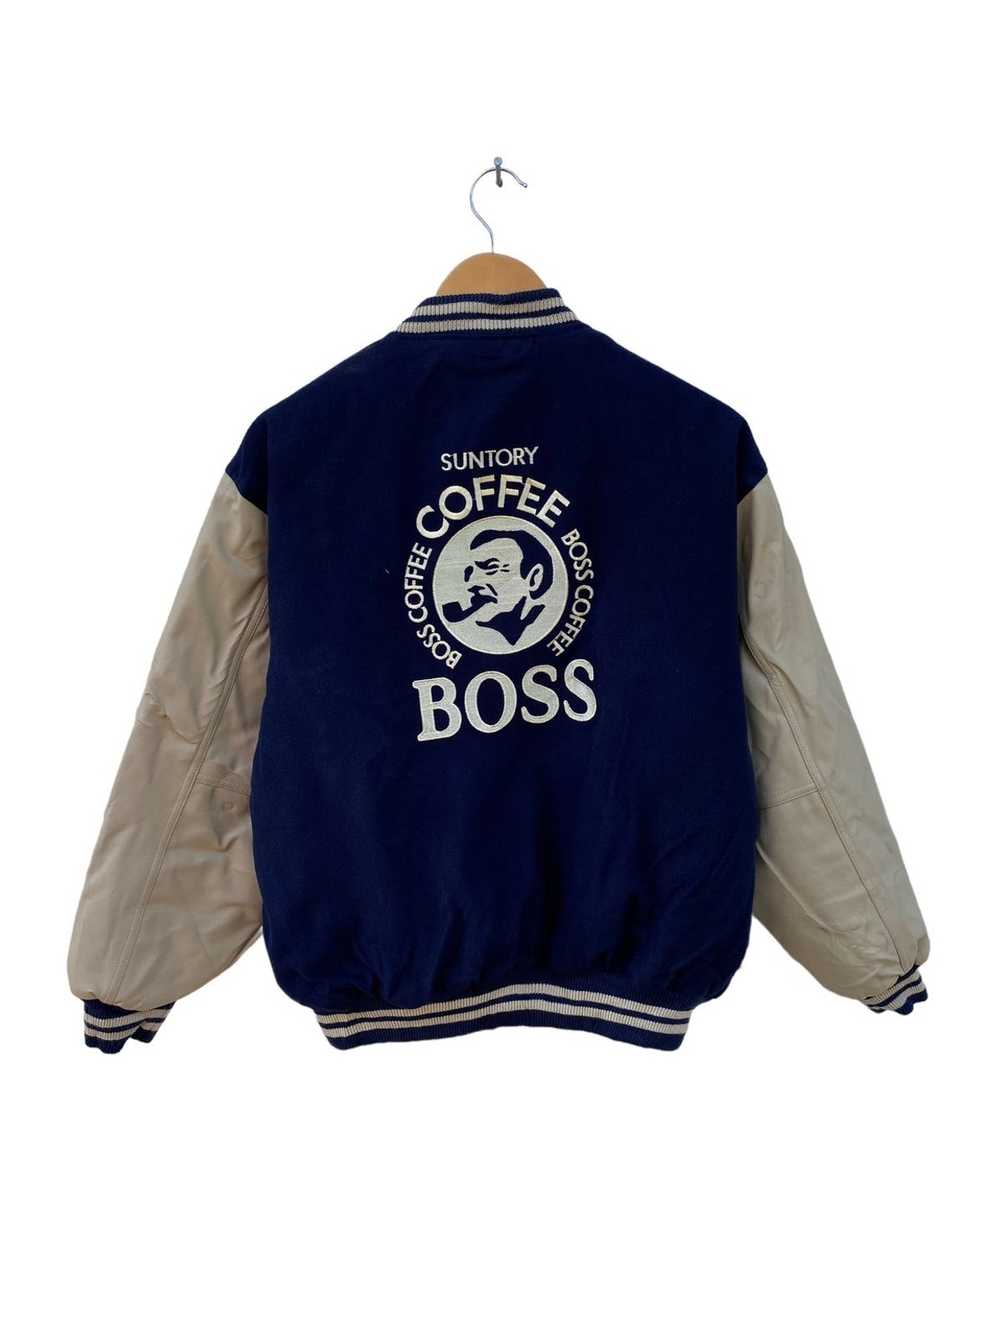 Varsity Jacket Suntory boss coffee varsity jacket - image 1